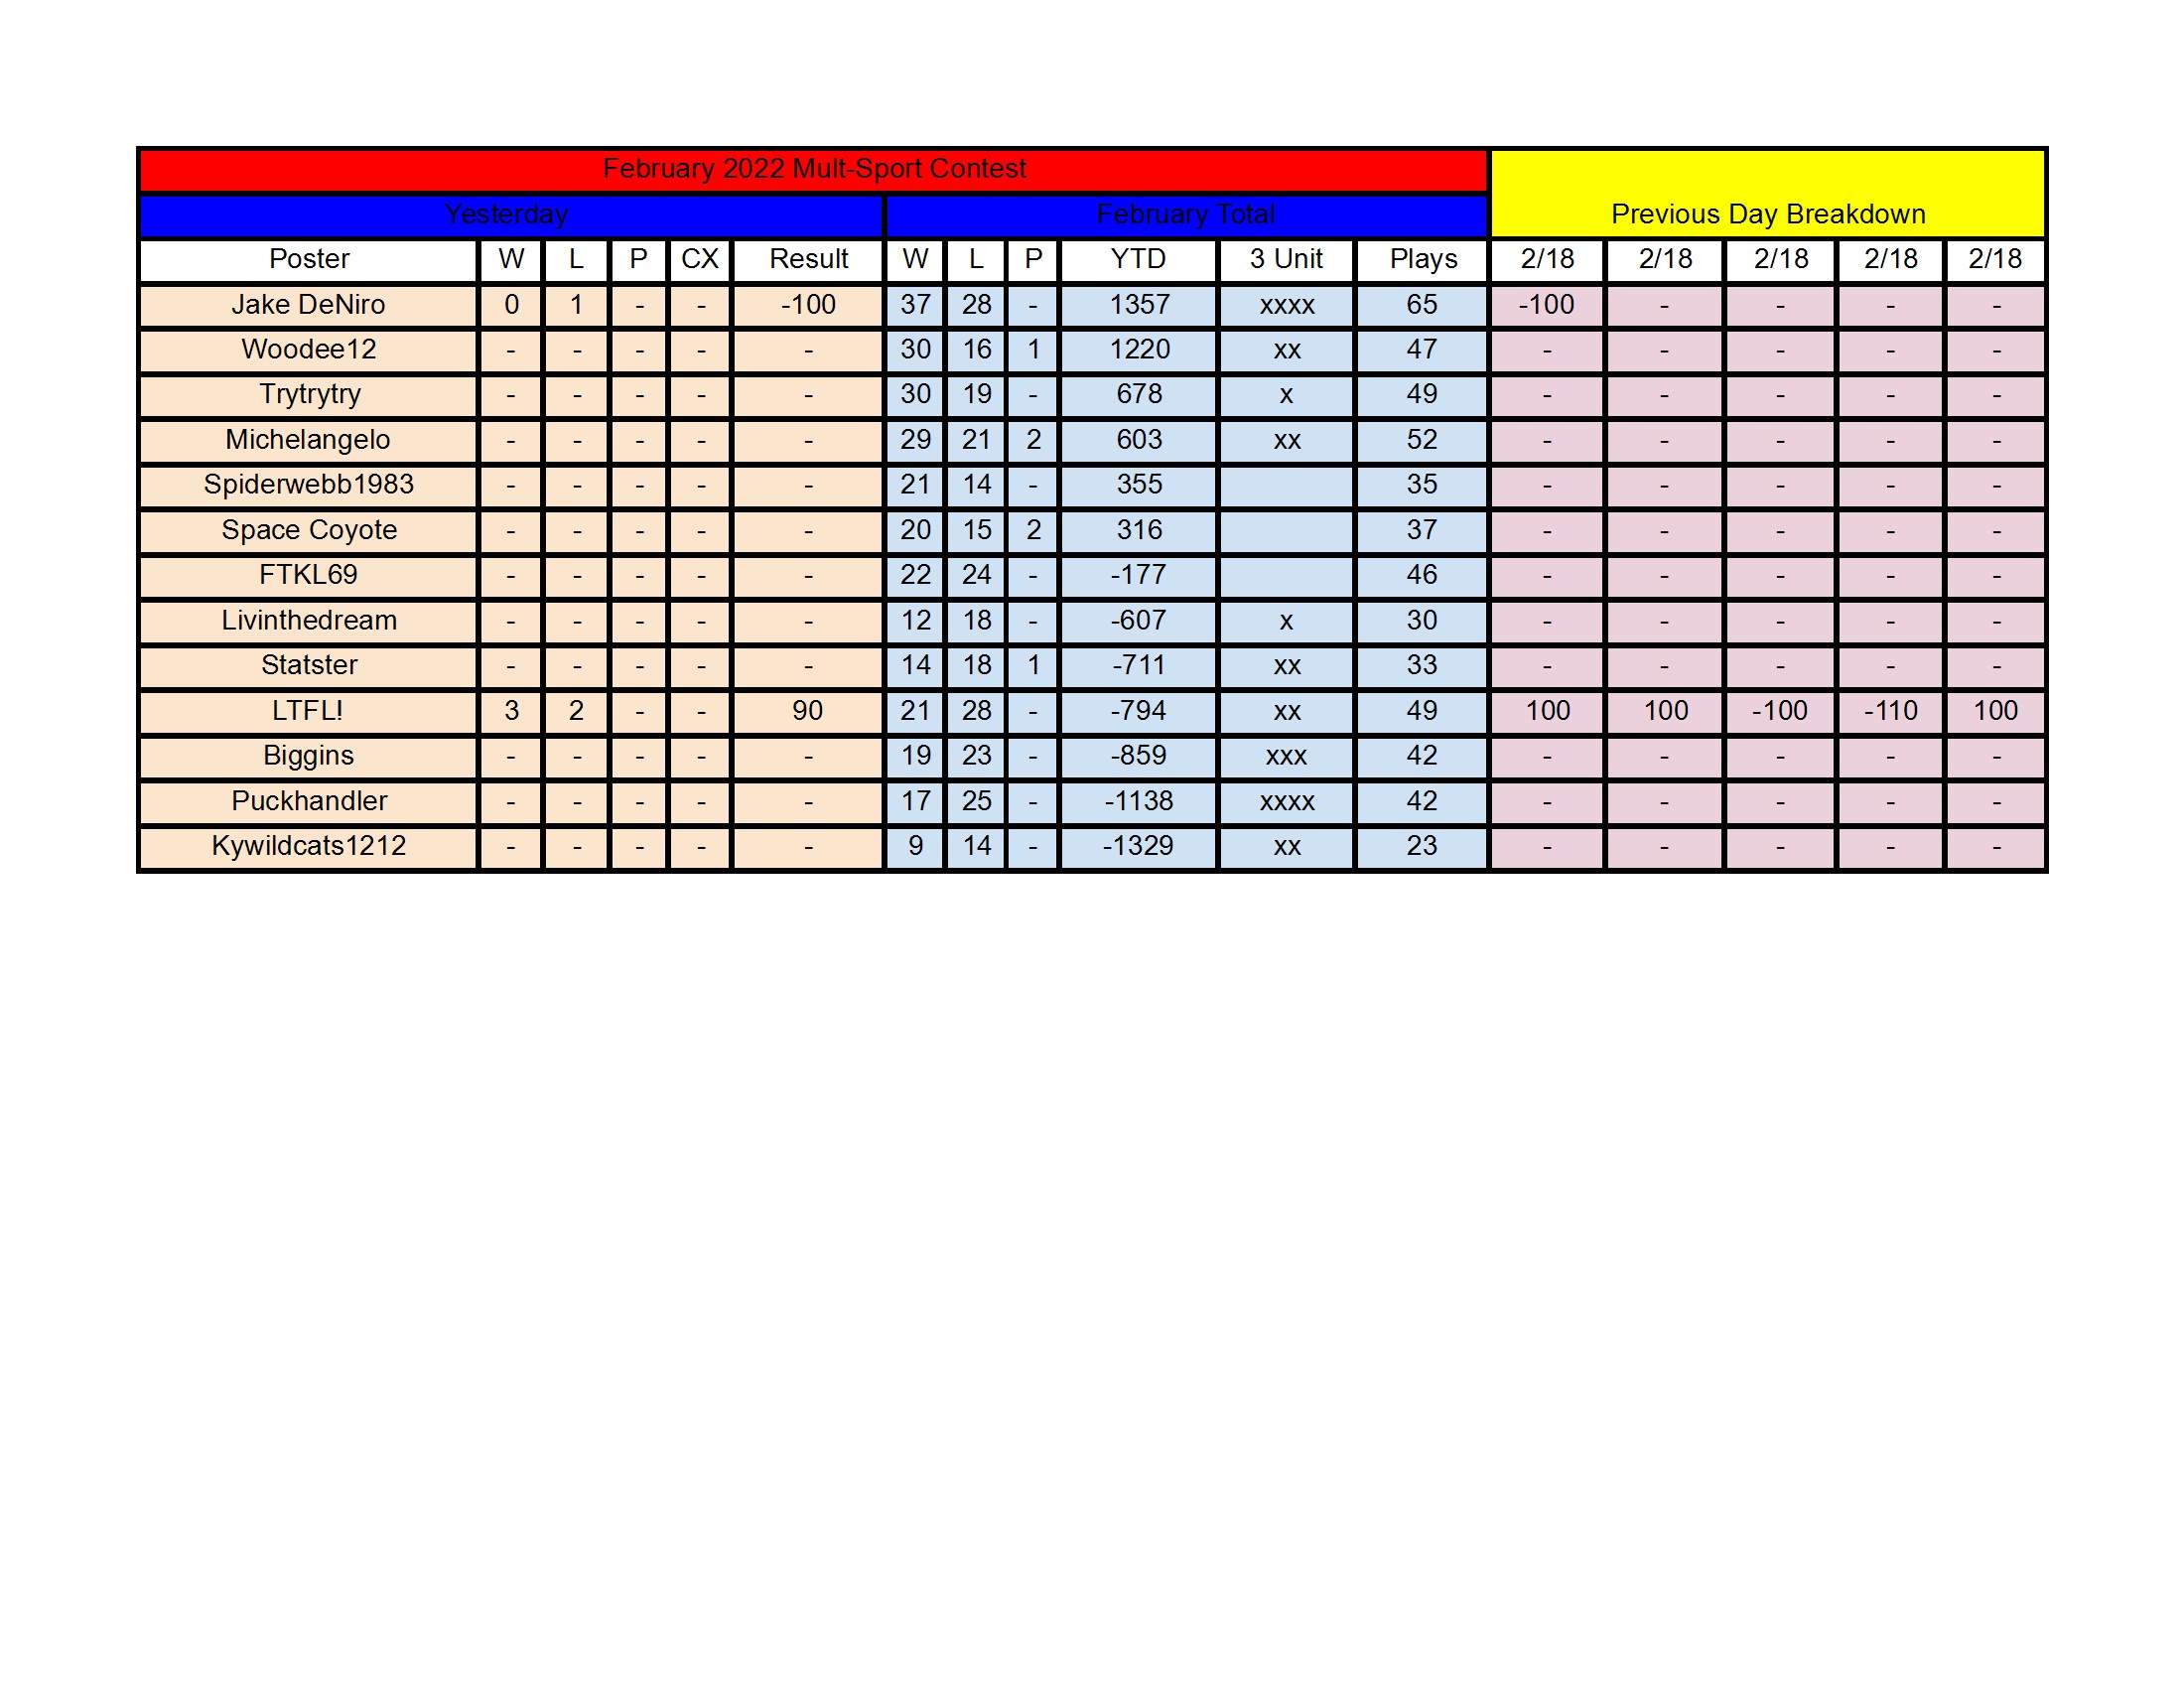 February Standings - 2_18 conv 1.jpeg